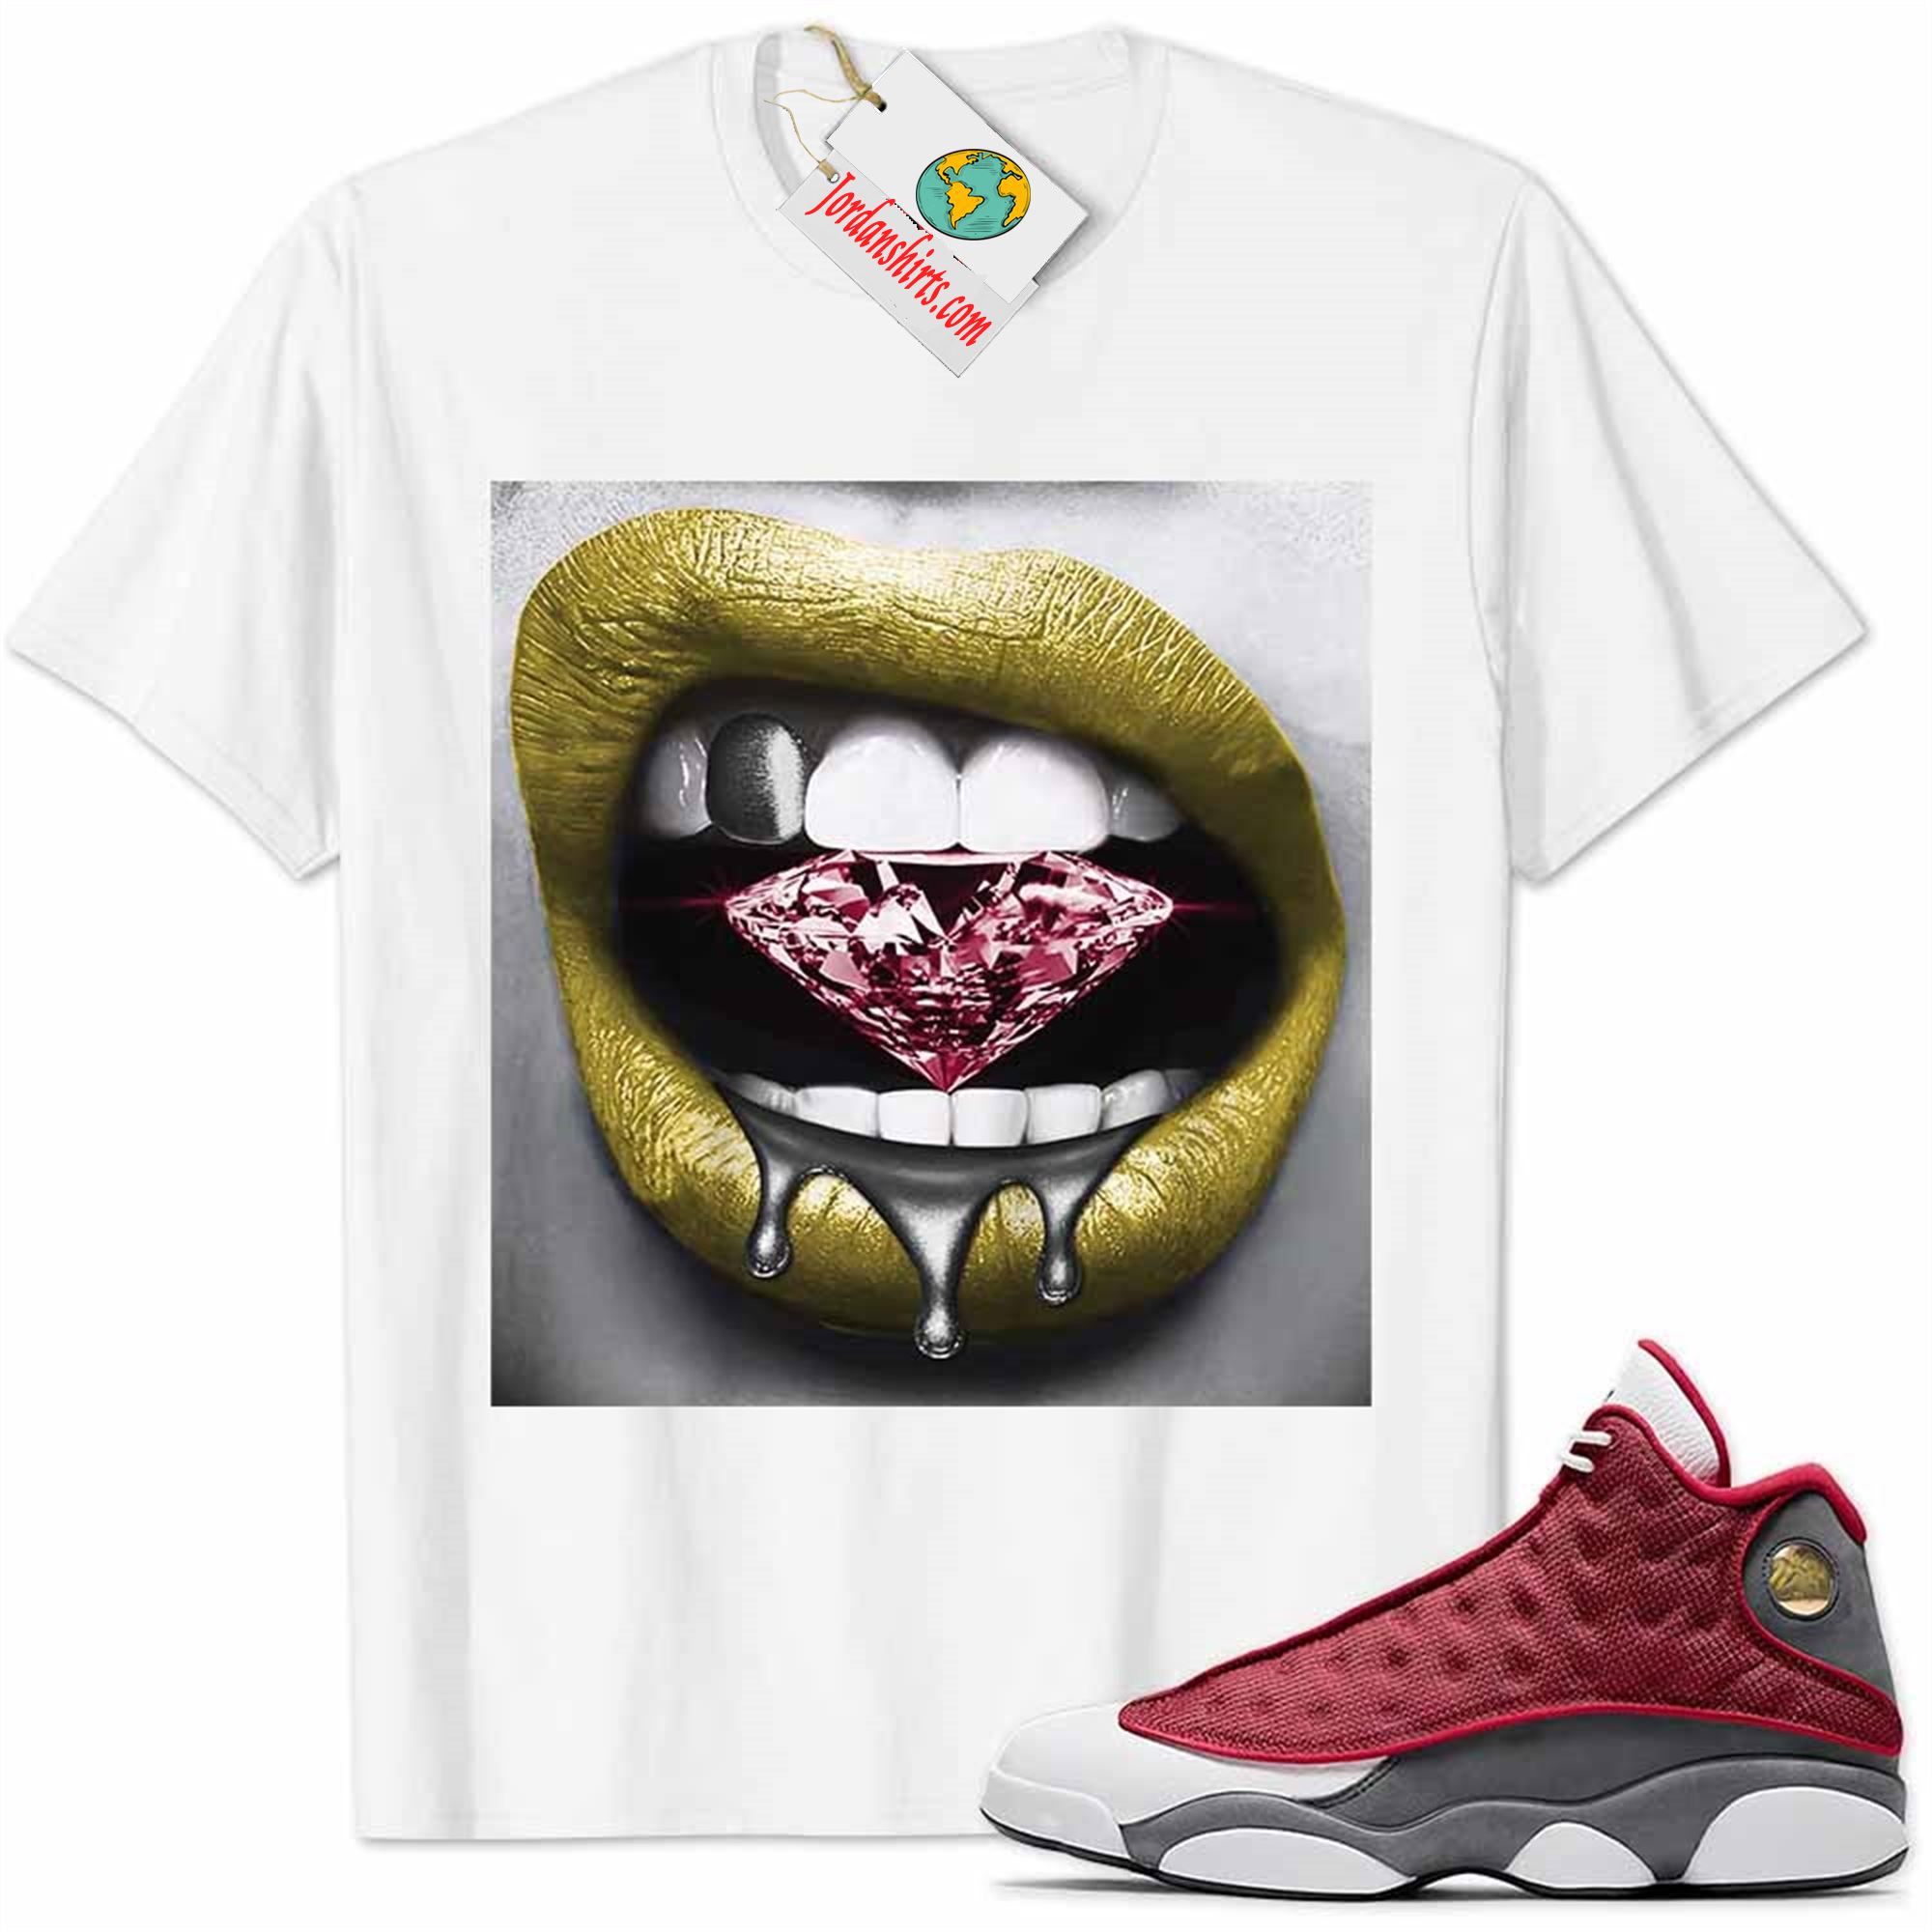 Jordan 13 Shirt, Jordan 13 Red Flint Shirt Sexy Lip Bite Diamond Dripping White Plus Size Up To 5xl